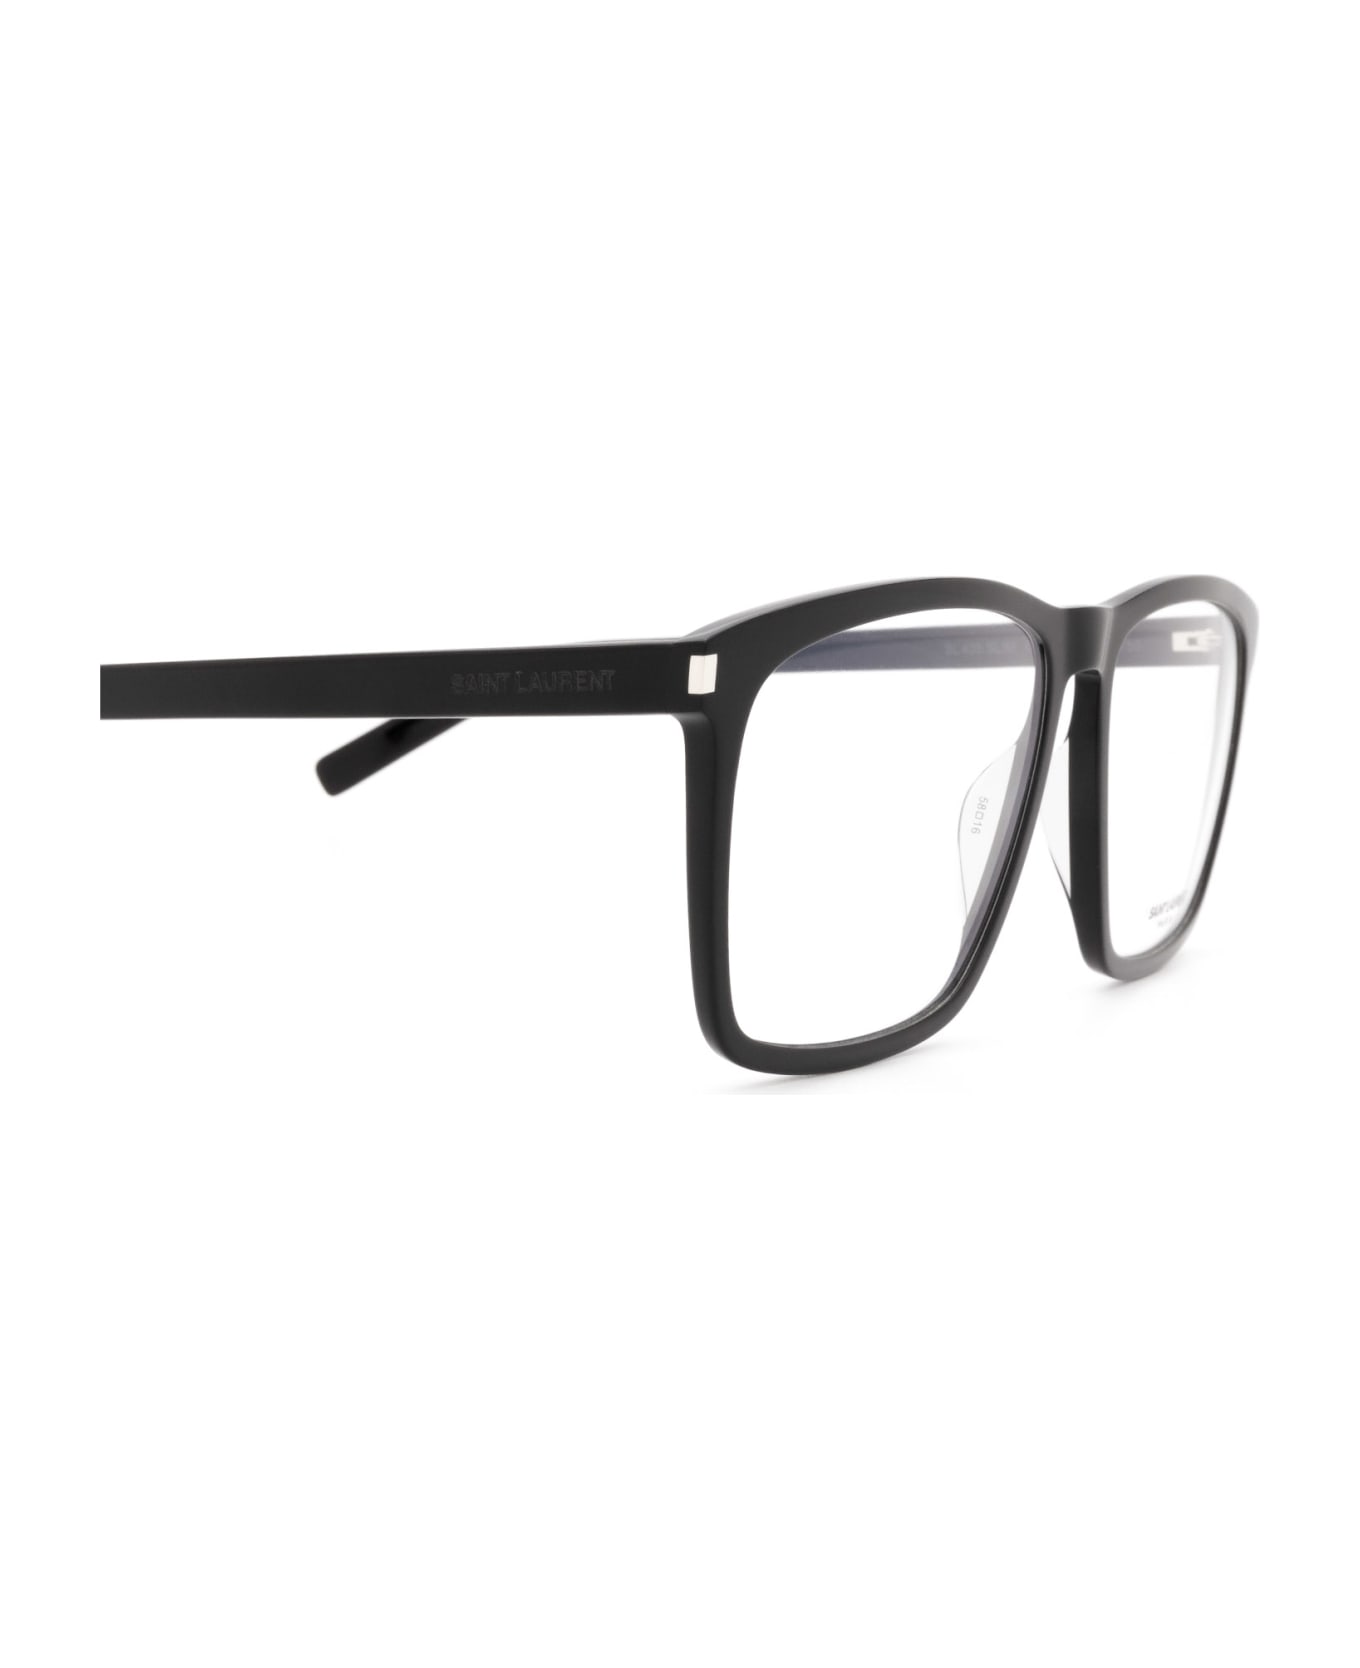 Saint Laurent Eyewear Sl 435 Slim Black Glasses - Black